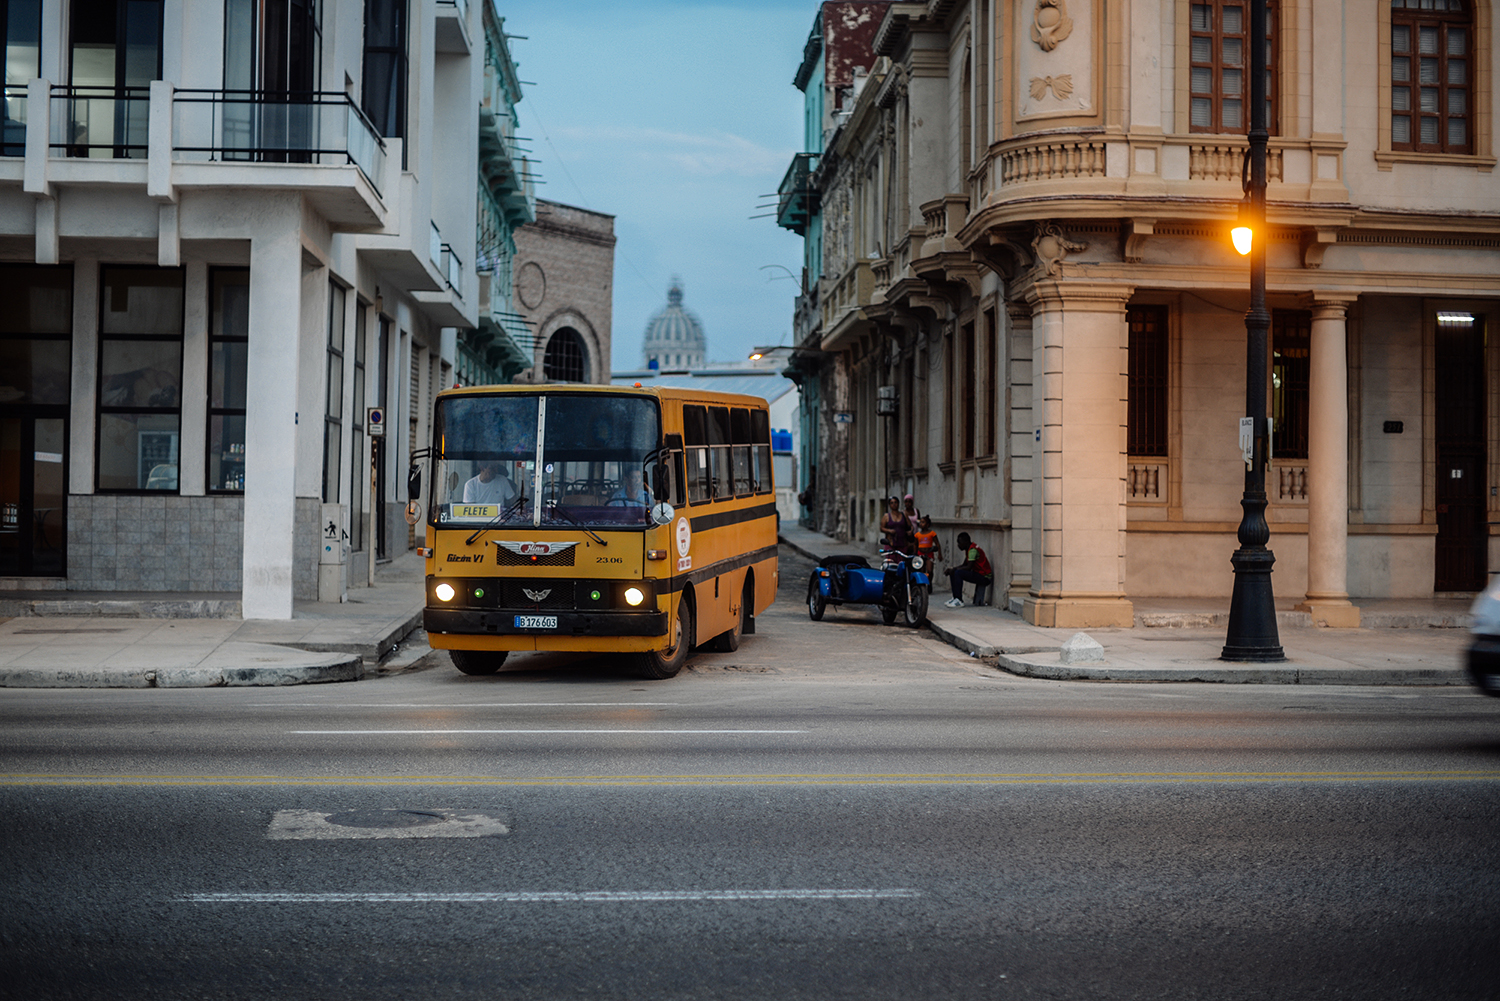 Havanna Reise Tipps_Havanna 3 Tage_Havanna reise erfahrung_Havanna sehenswürdigkeiten_Havanna tipps_Kiamisu_Reiseblog-final1